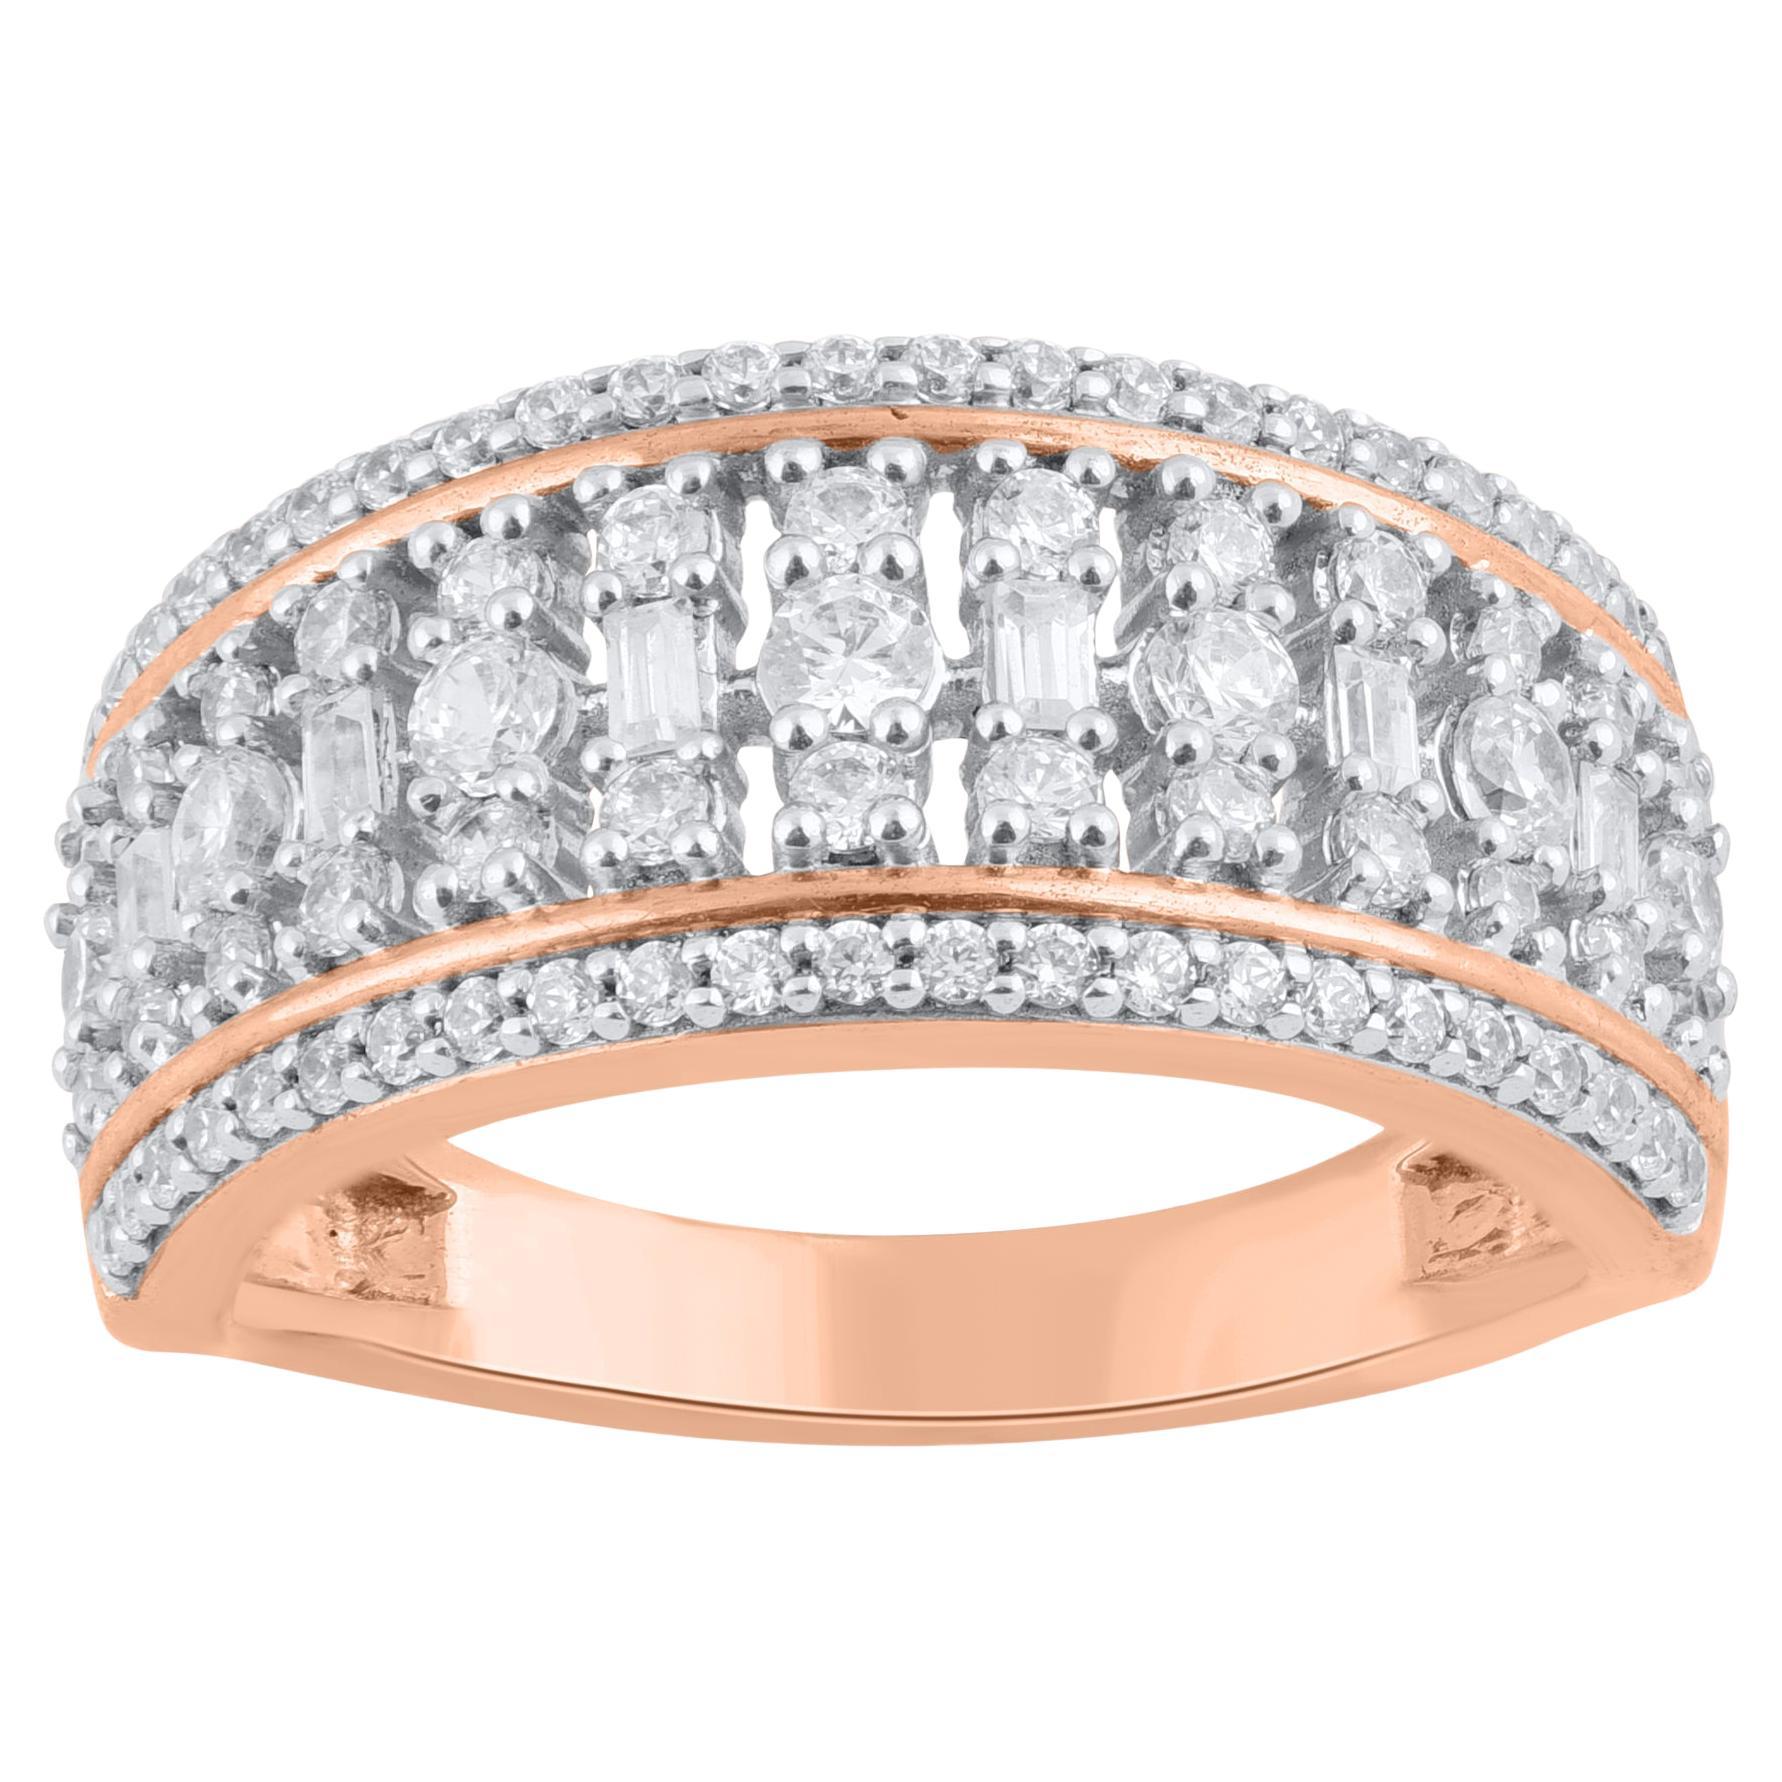 TJD 1.0 Carat Round & Baguette Natural Diamond 14KT Rose Gold Wedding Band Ring